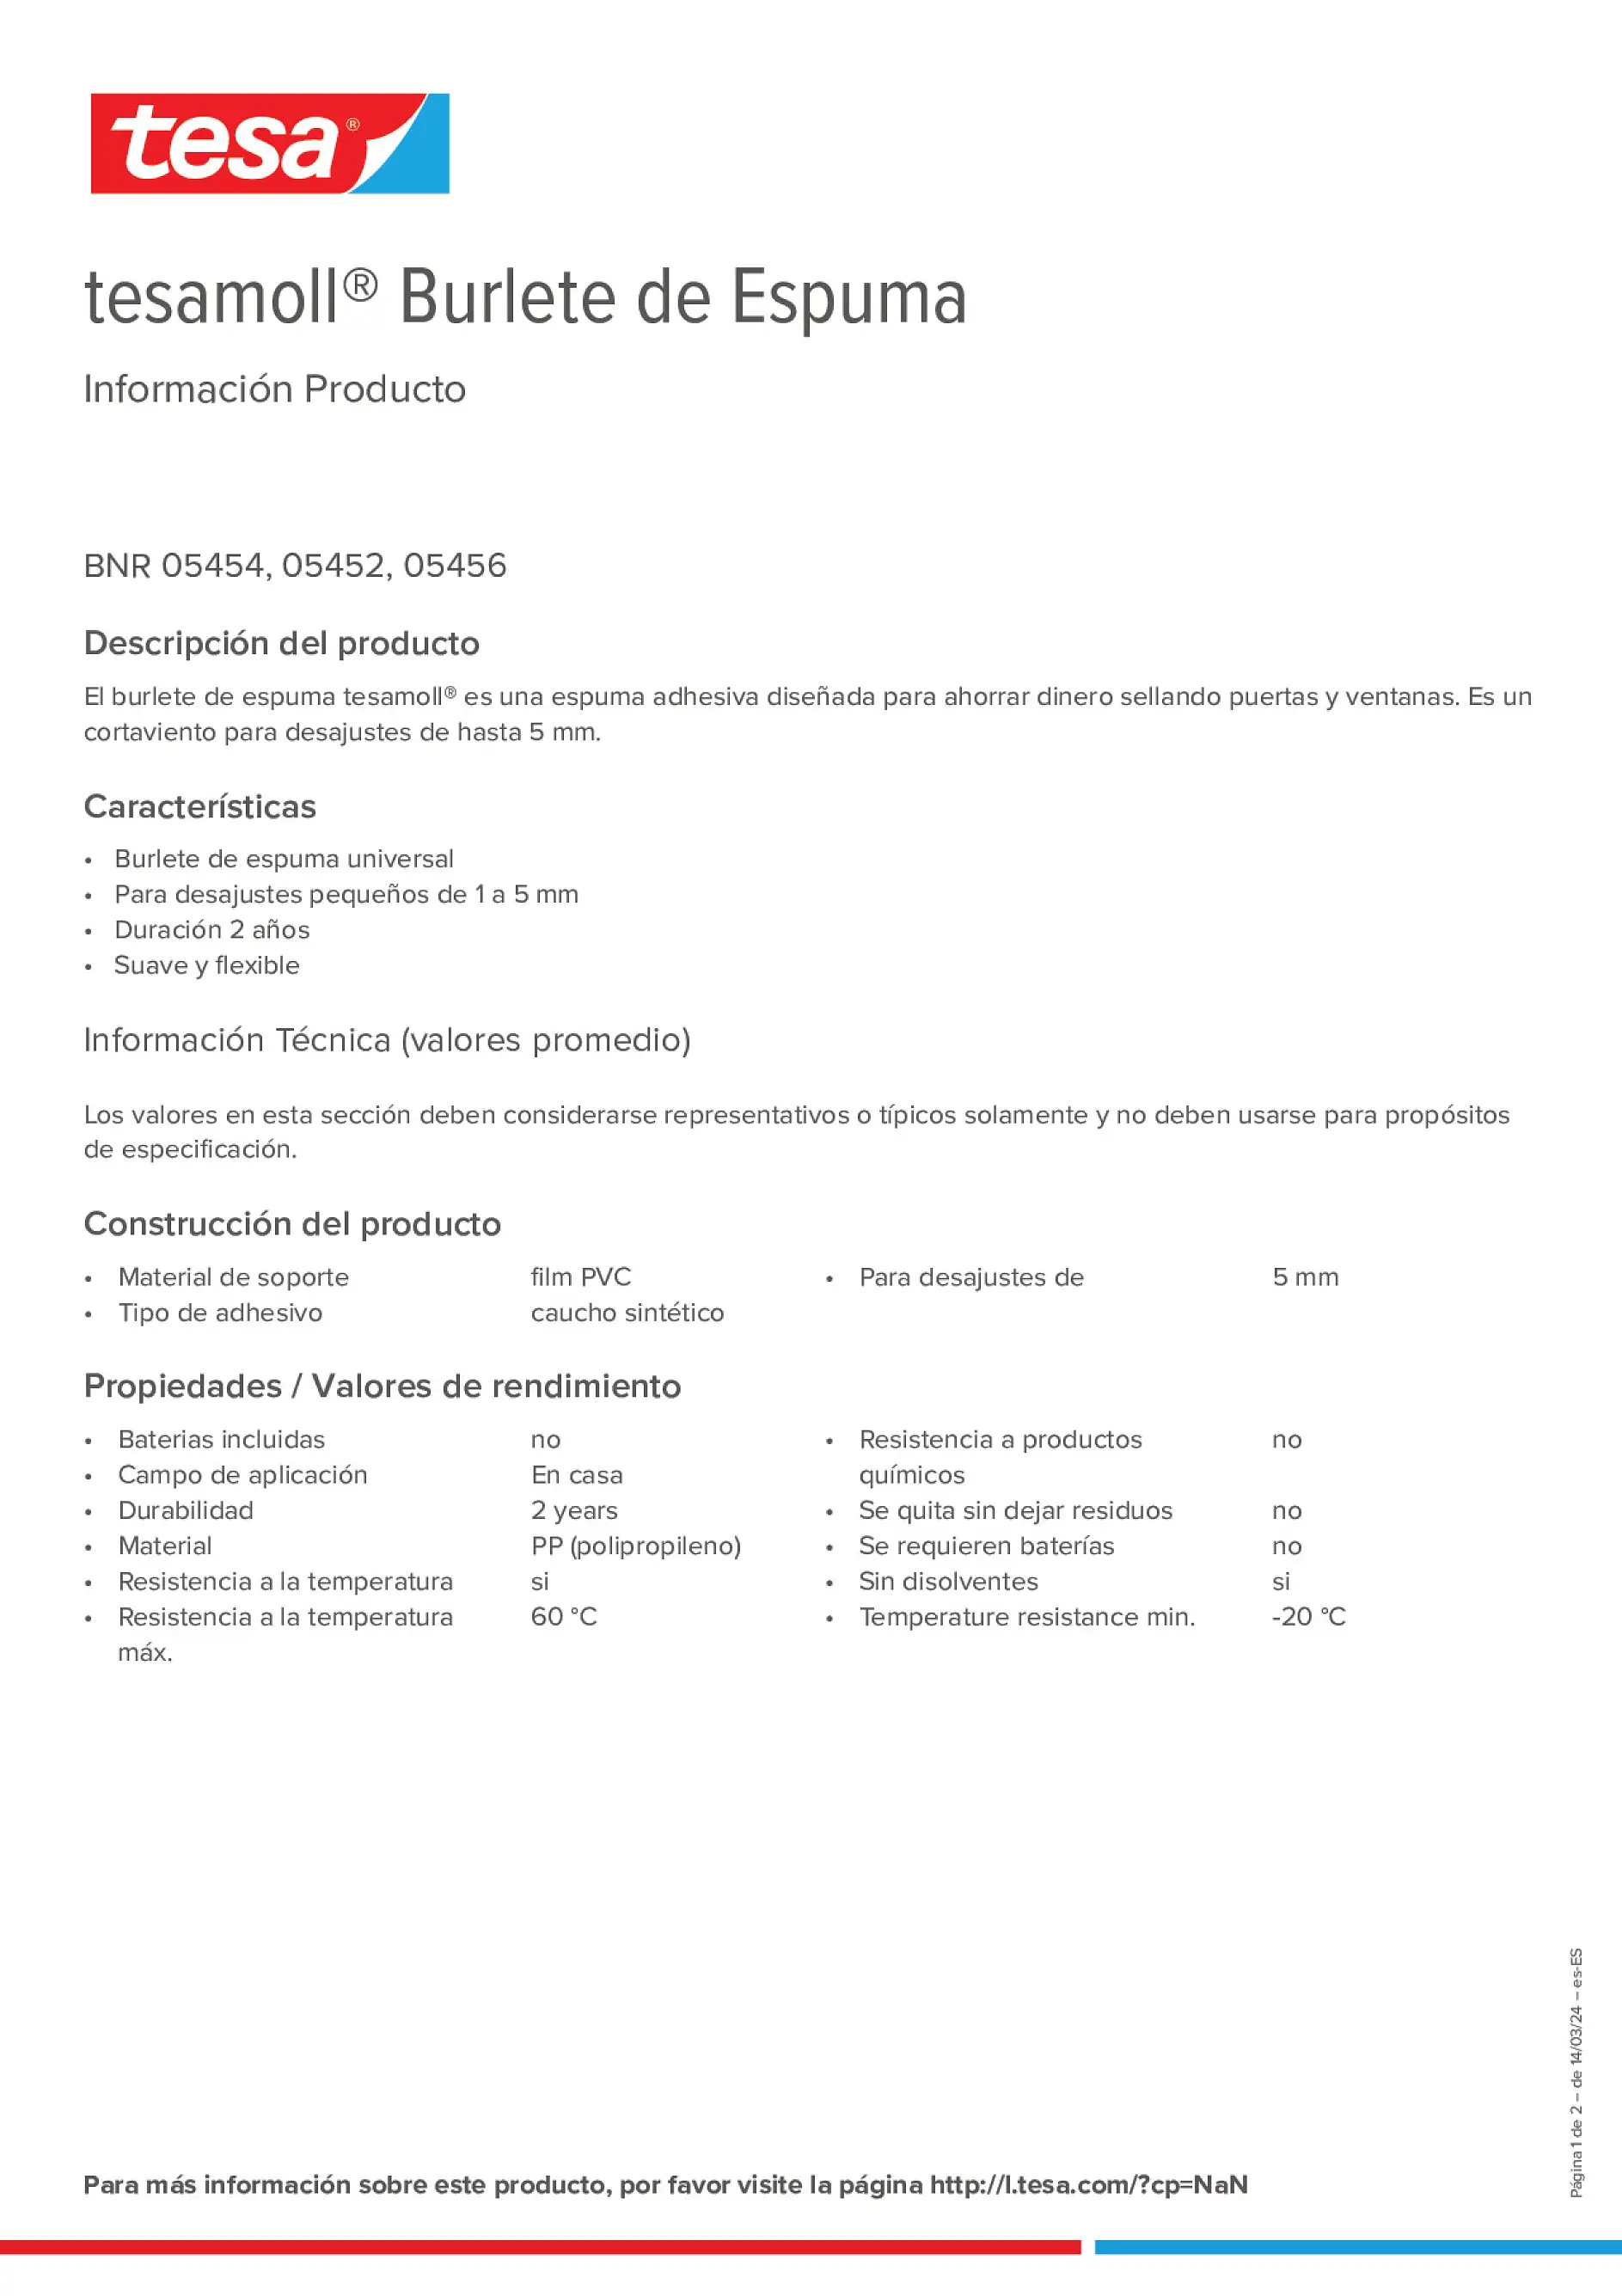 Product information_tesamoll® 55604_es-ES